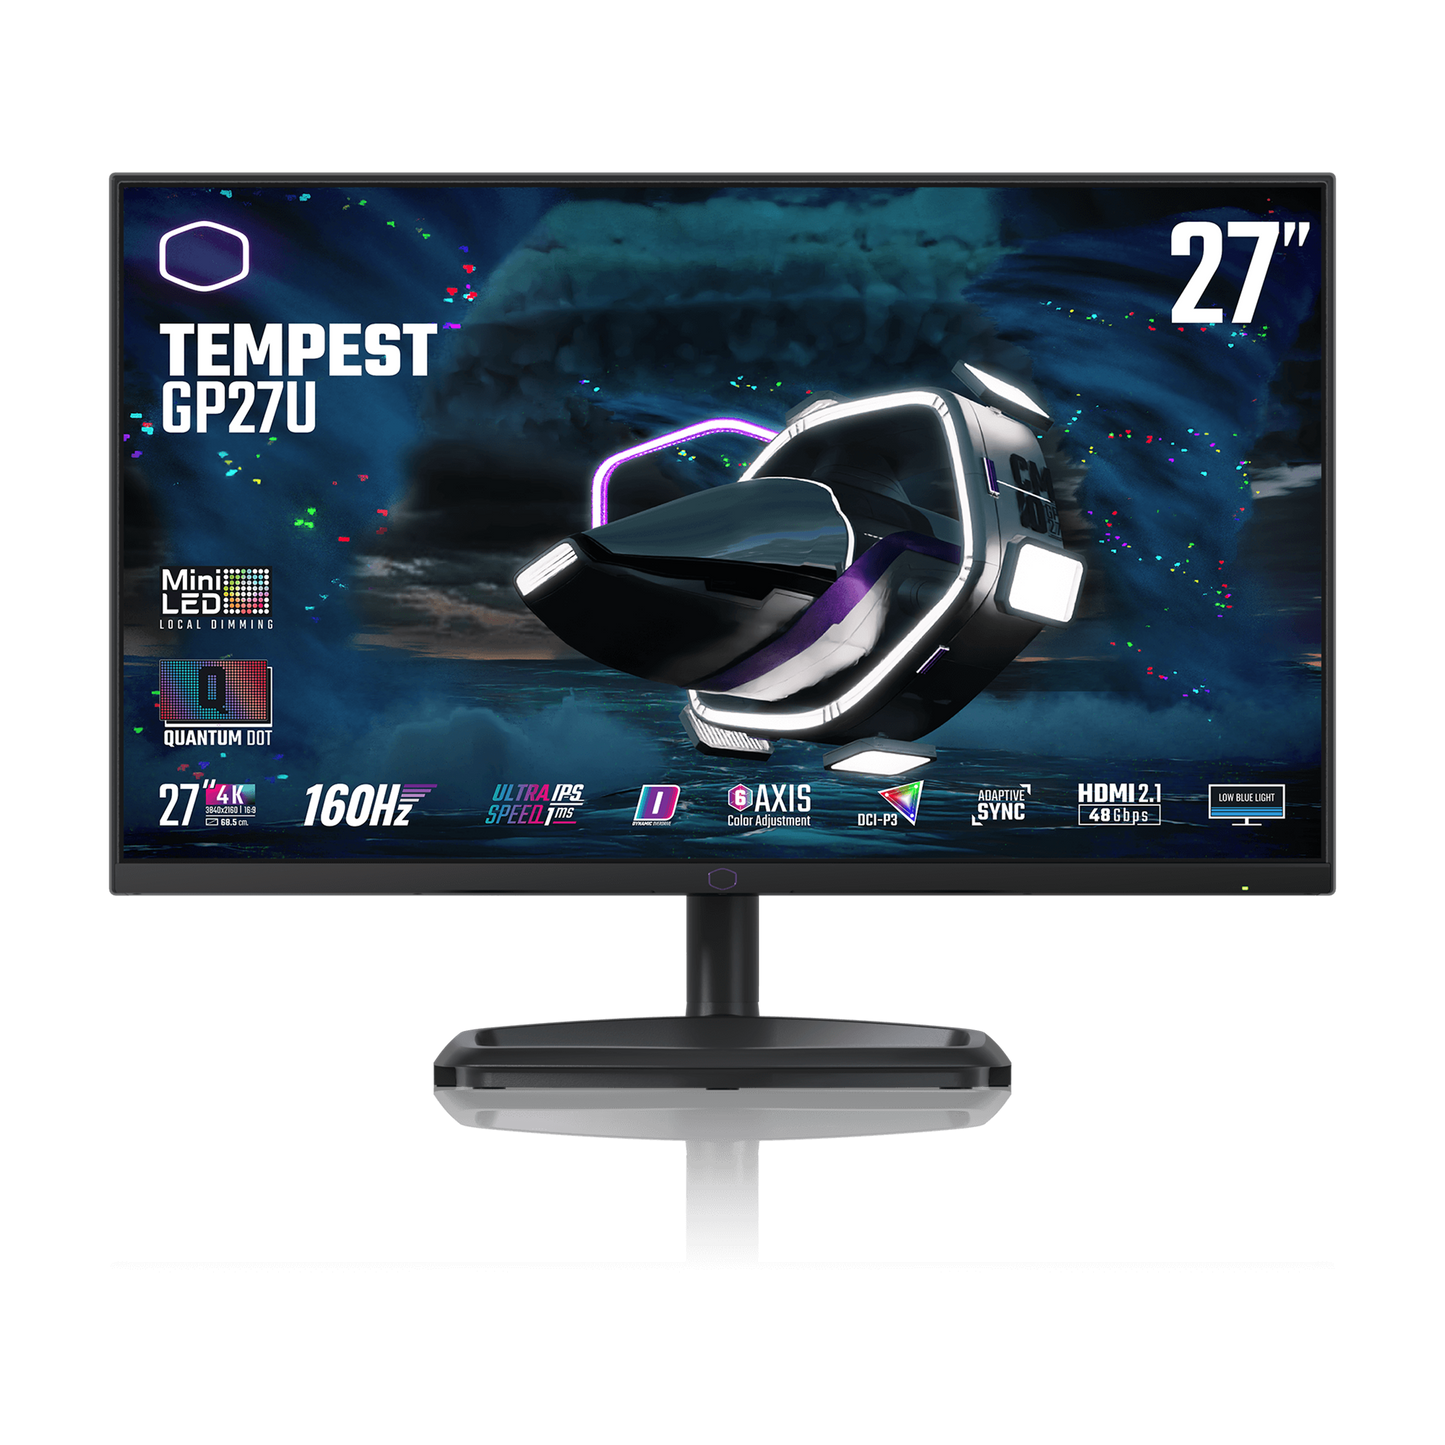 Cooler Master Tempest GP27U - Monitor para juegos UHD 3840x2160 MiniLED 160Hz - 27 pulgadas